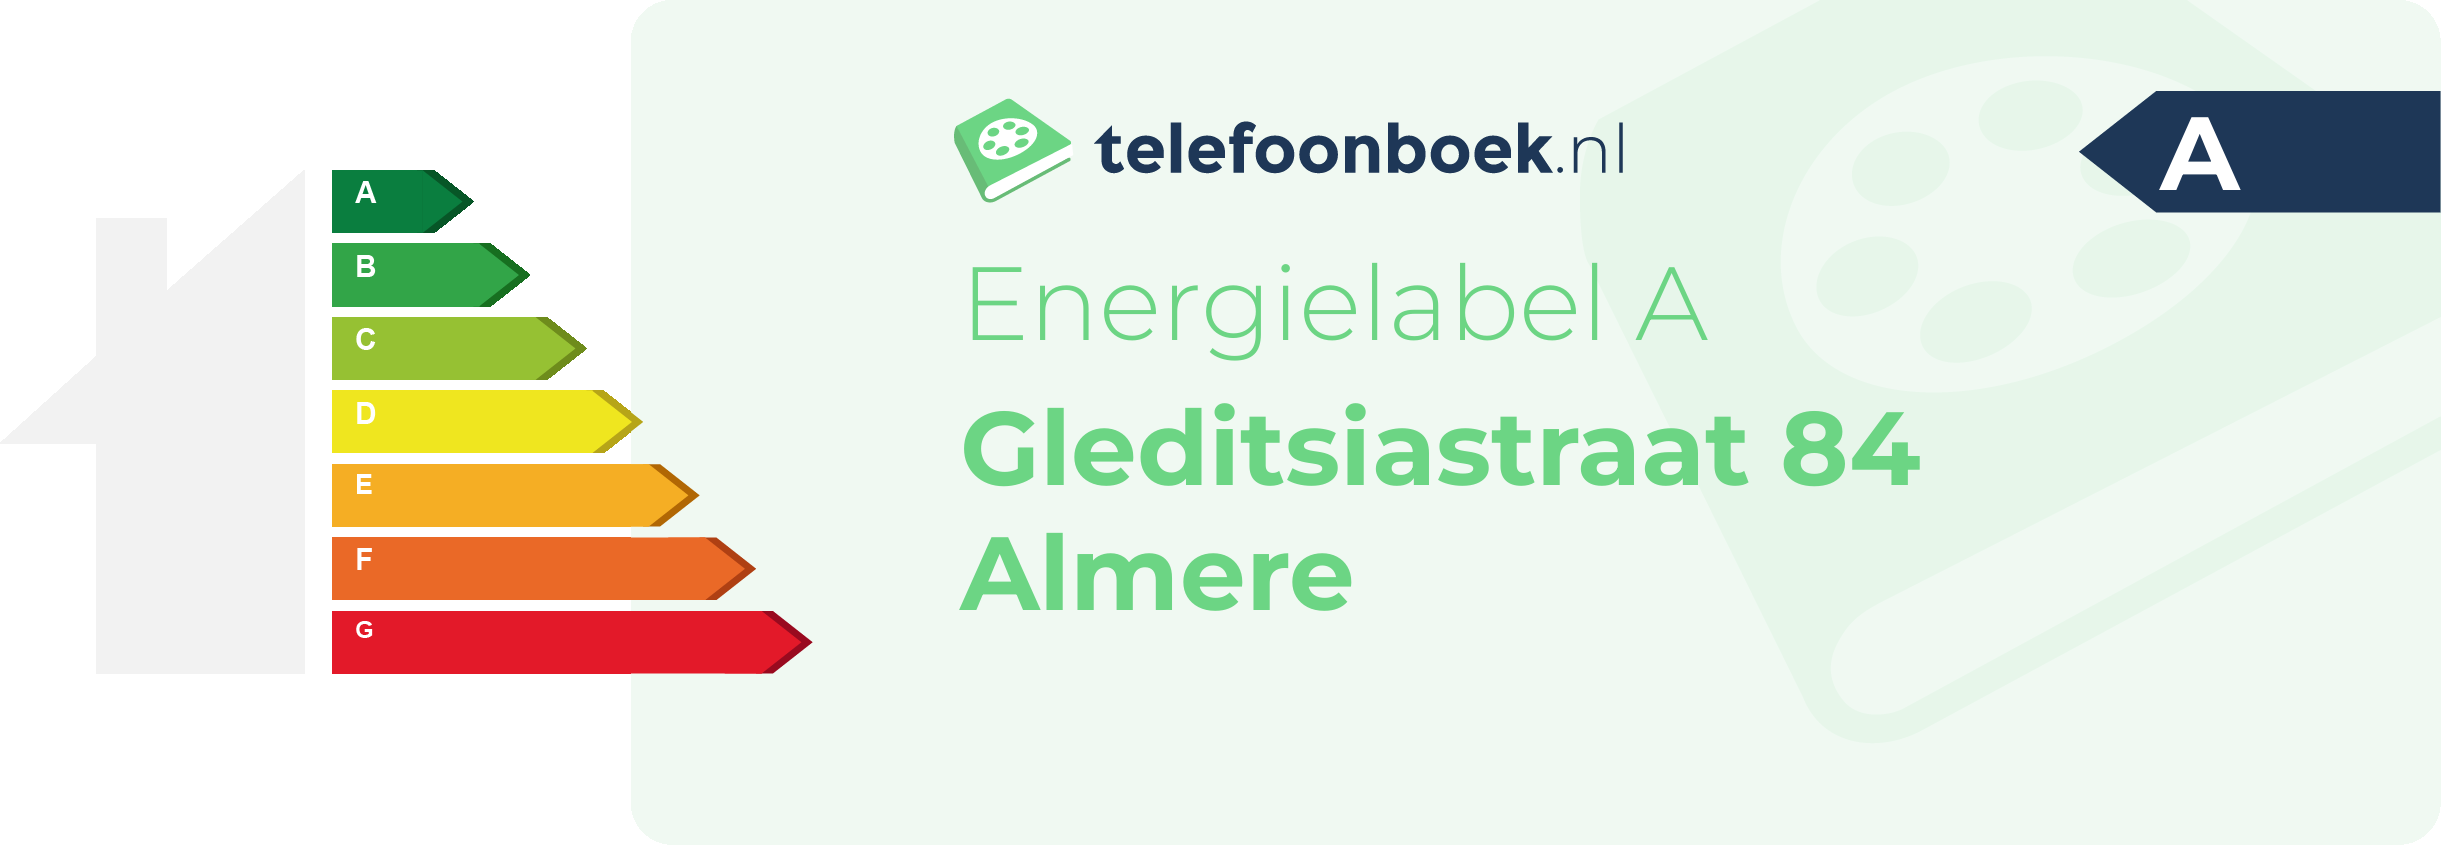 Energielabel Gleditsiastraat 84 Almere